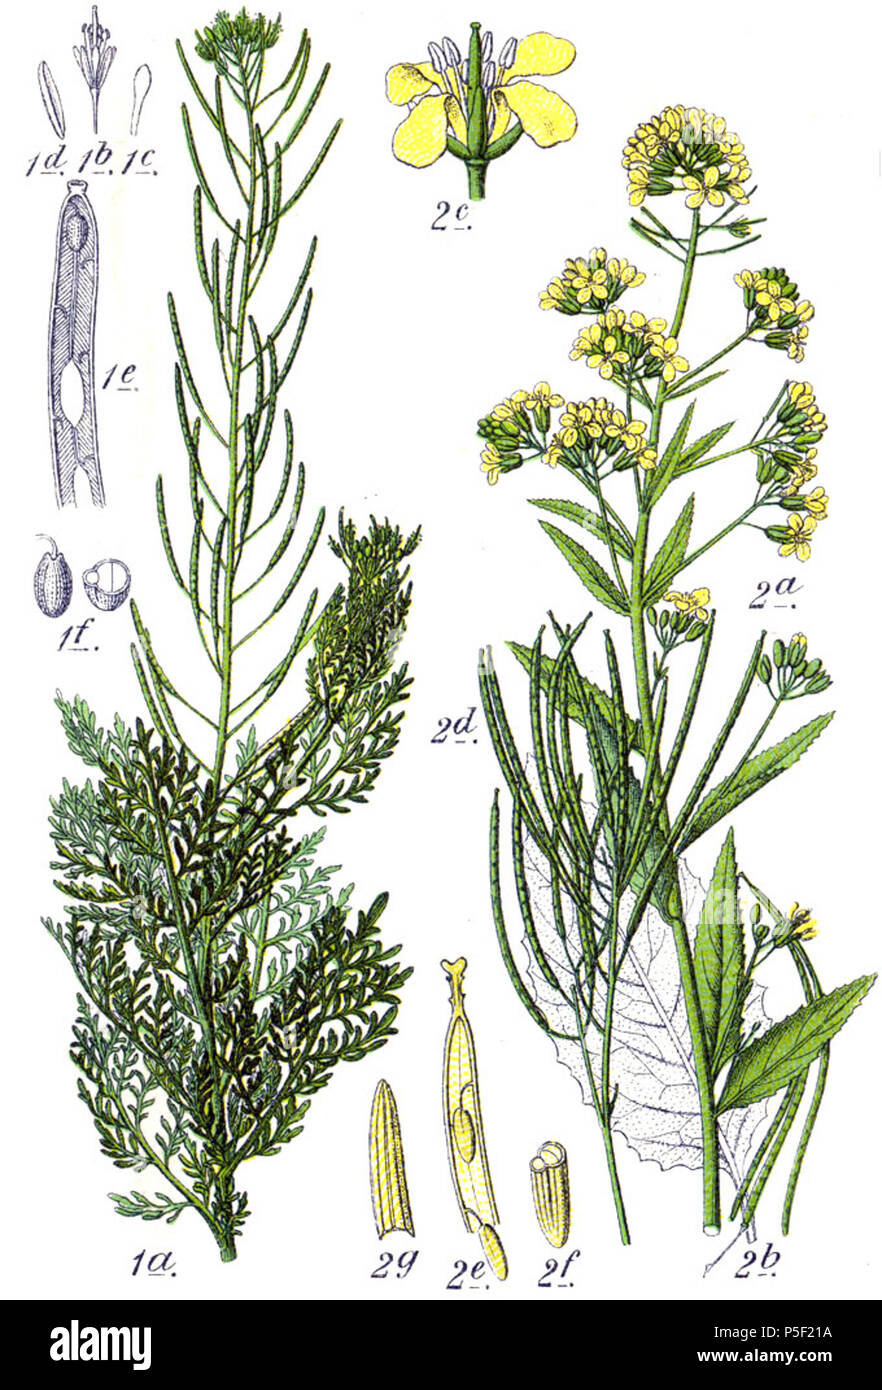 N/A. 1. Descurainia sophia (L.) Webb ex Prantl, syn. Crucifera sophia (L.) E.H.L.Krause 2. Sisymbrium strictissimum L., syn. Crucifera strictissima (L.) E.H.L.Krause Original Description 1. Wellsame, Crucifera sophia 2. Ganz steife Rauke, C. strictissima . 1796. Johann Georg Sturm (Painter: Jacob Sturm) 229 Brassicaceae spp Sturm5 Stock Photo